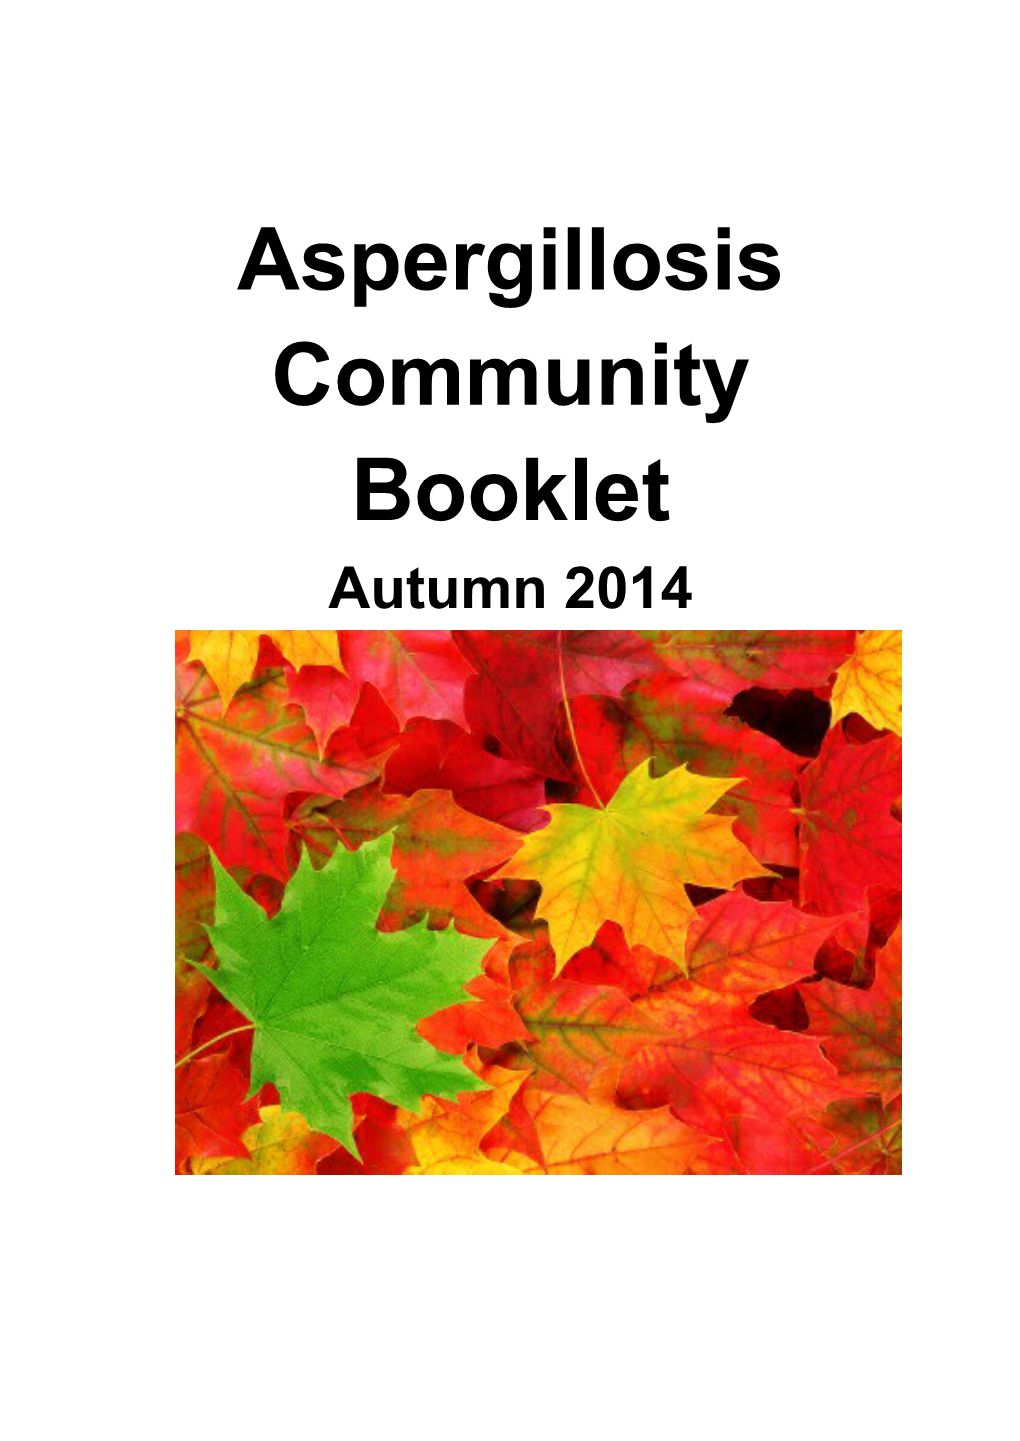 Aspergillosis Community